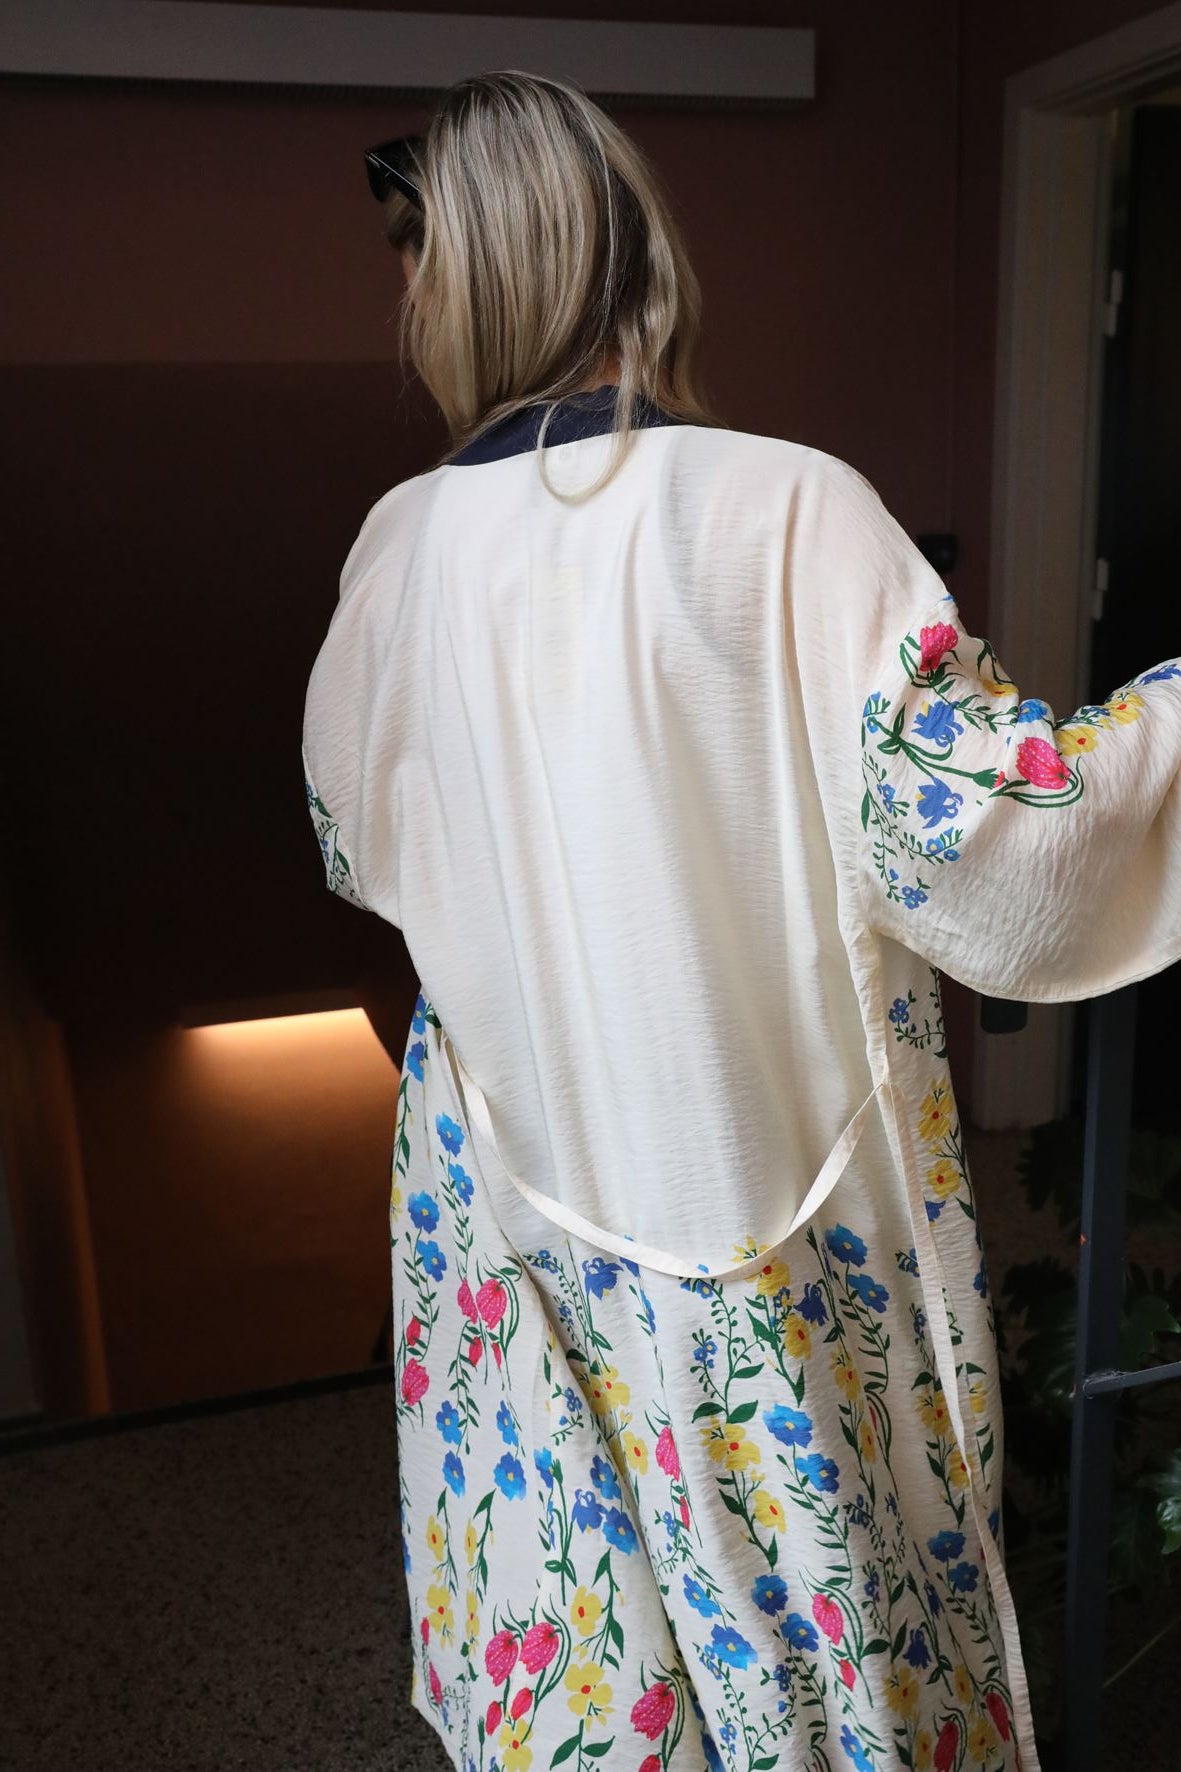 Florica Luelle Kimono Clothing   - Becksöndergaard